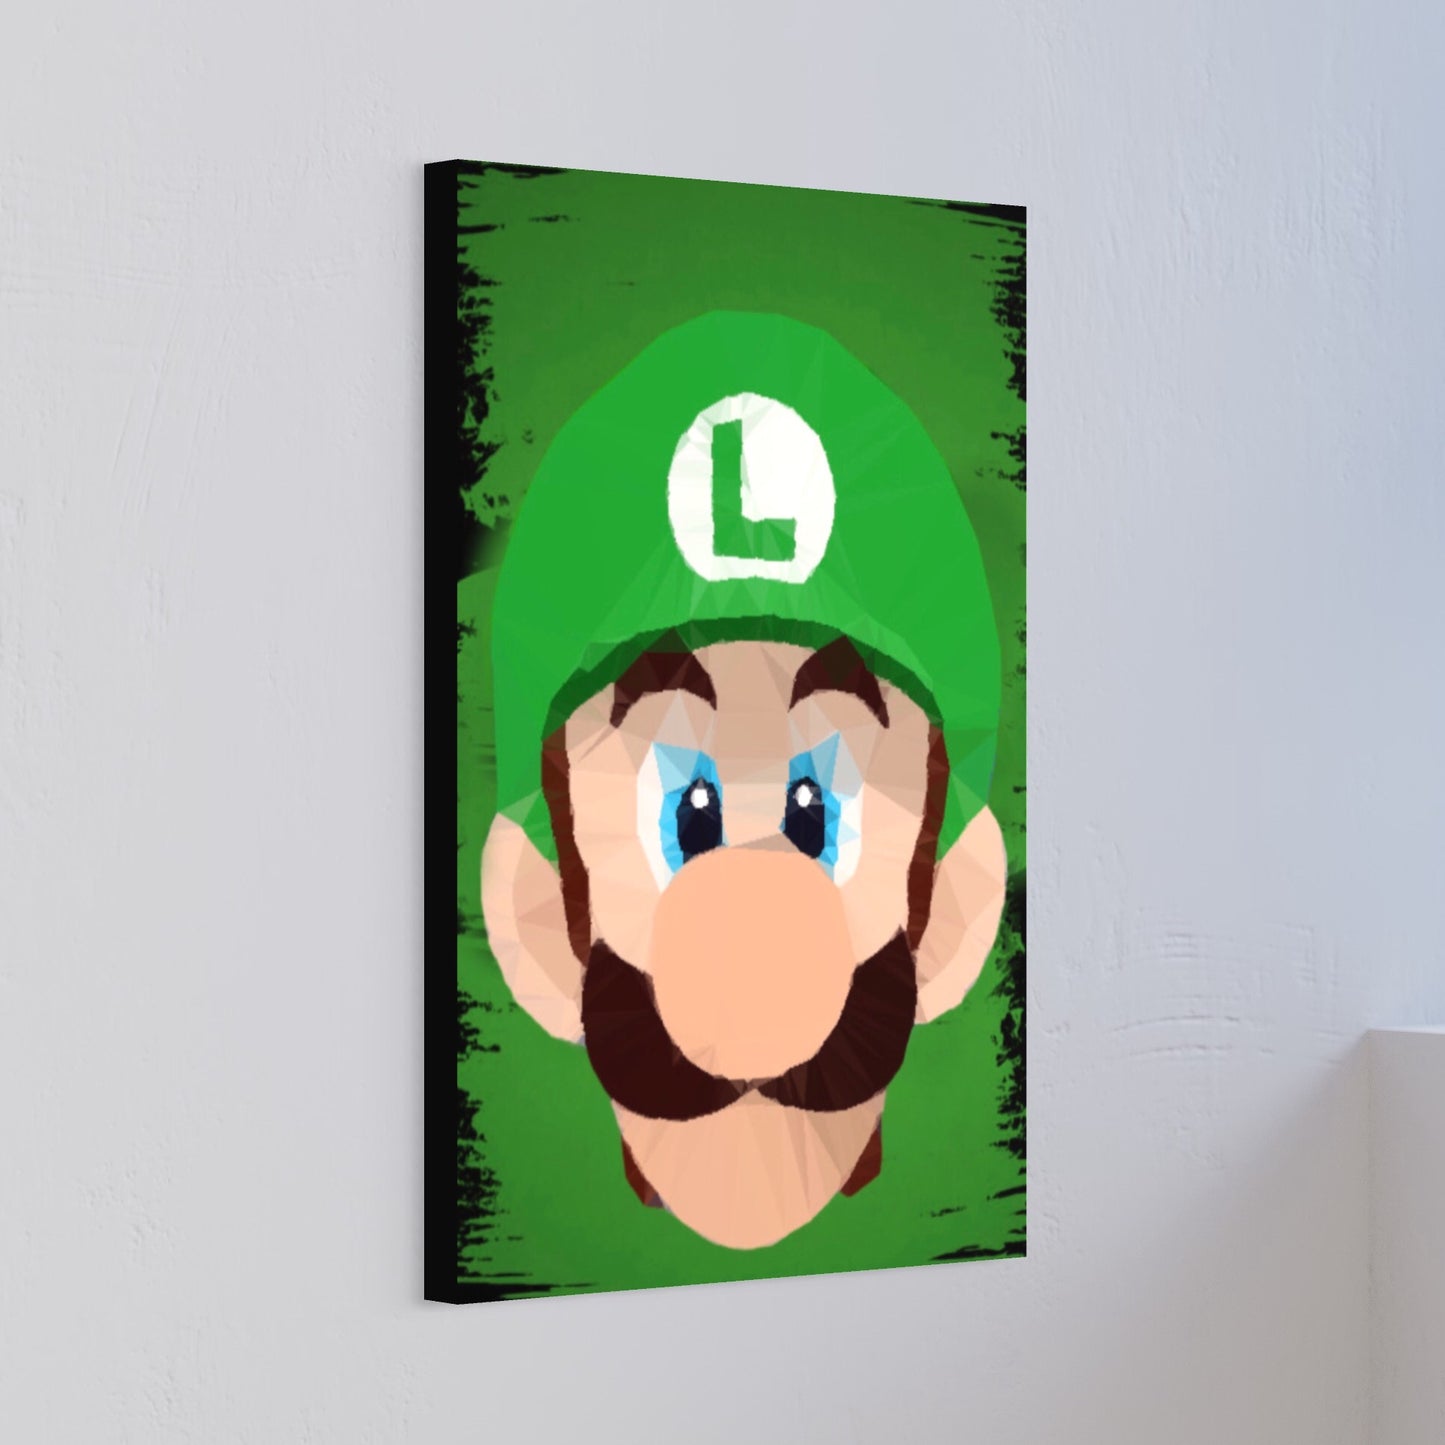 Luigi Artístico